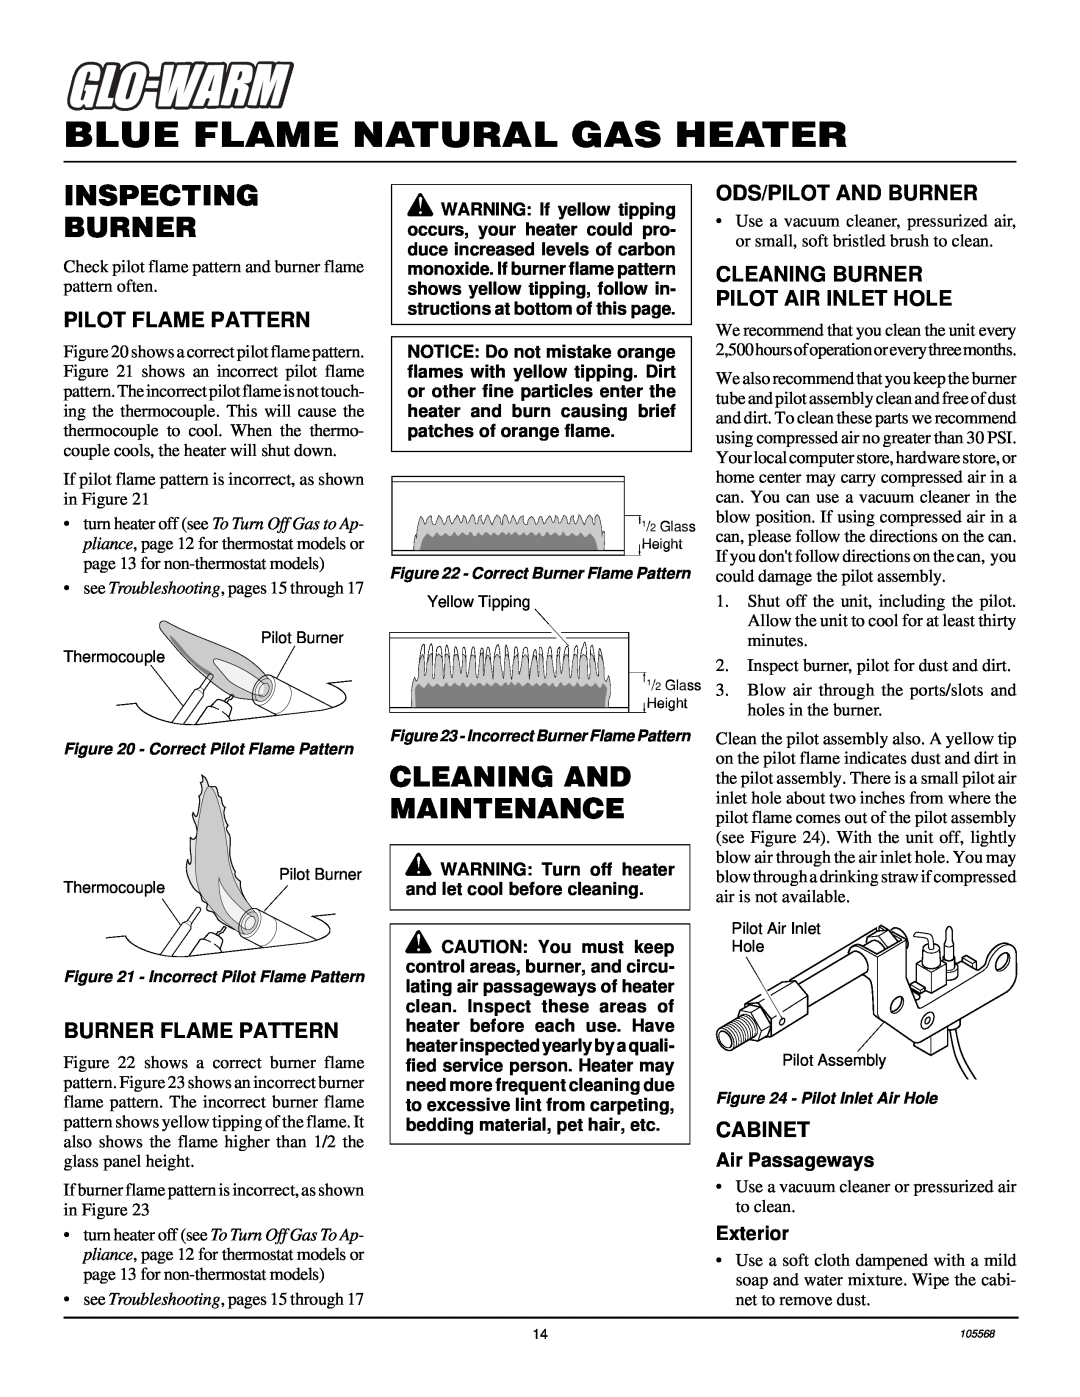 Desa FA-30BB Inspecting Burner, Cleaning And Maintenance, Pilot Flame Pattern, Burner Flame Pattern, Ods/Pilot And Burner 